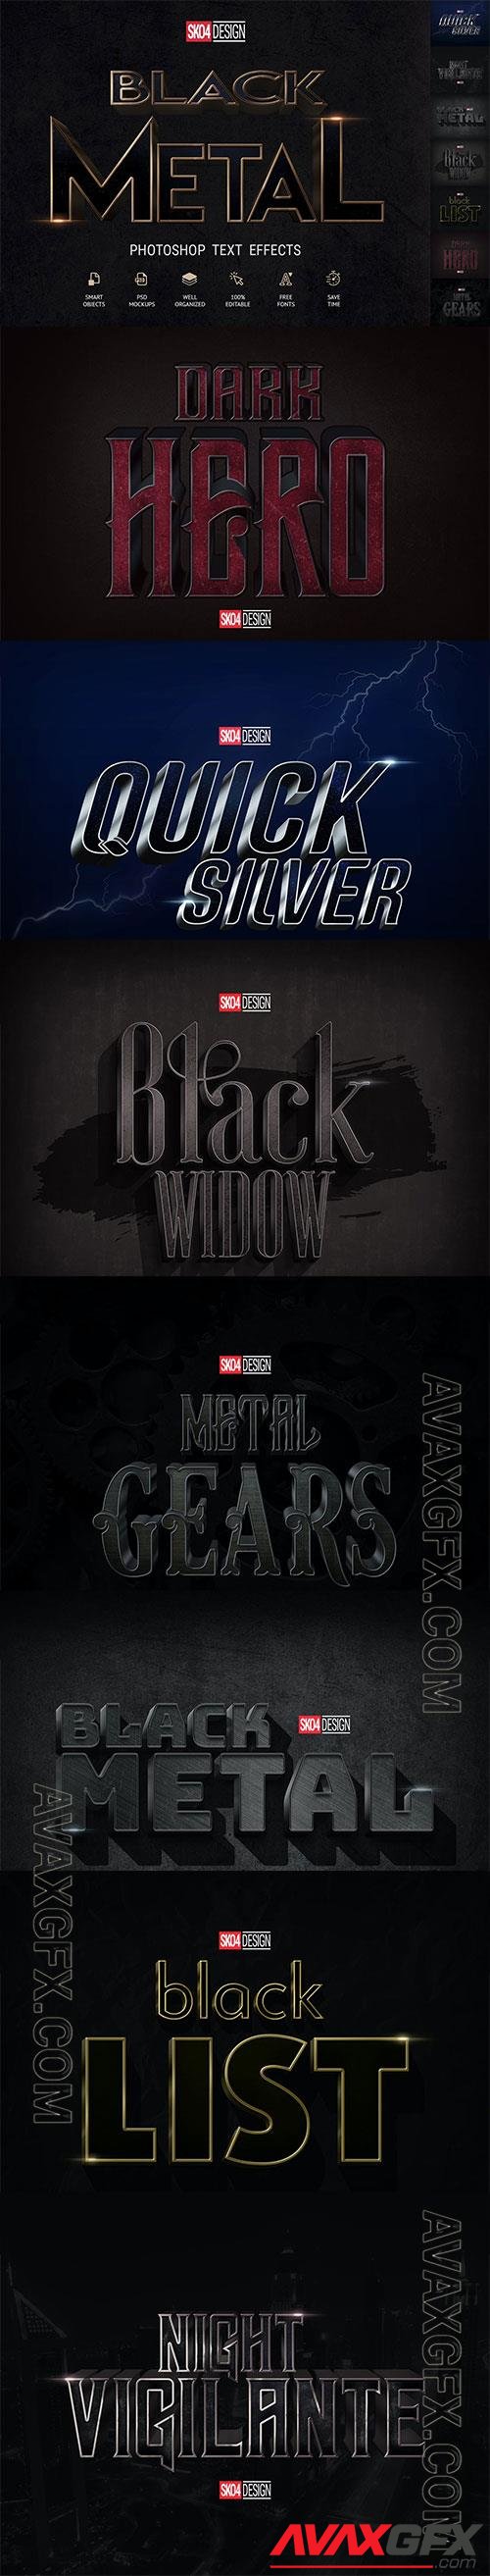 Black and Metal PSD mockups